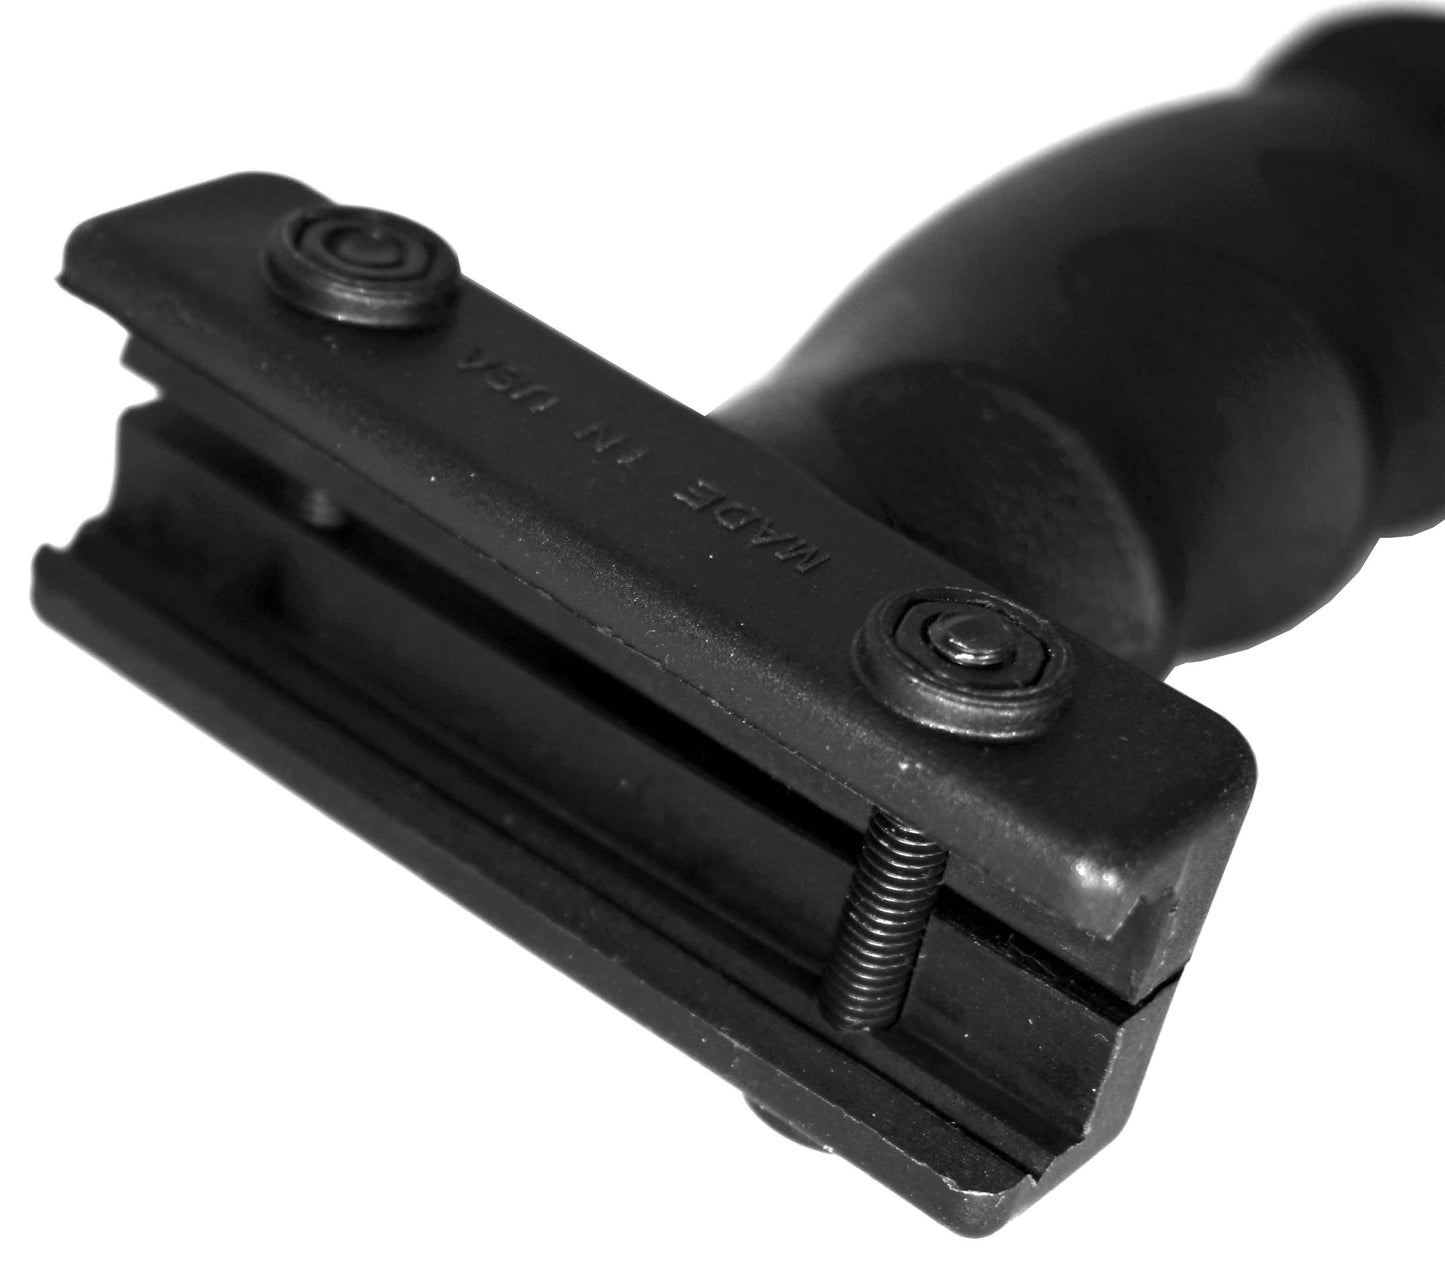 picatinny rail mounted grip for shotguns.